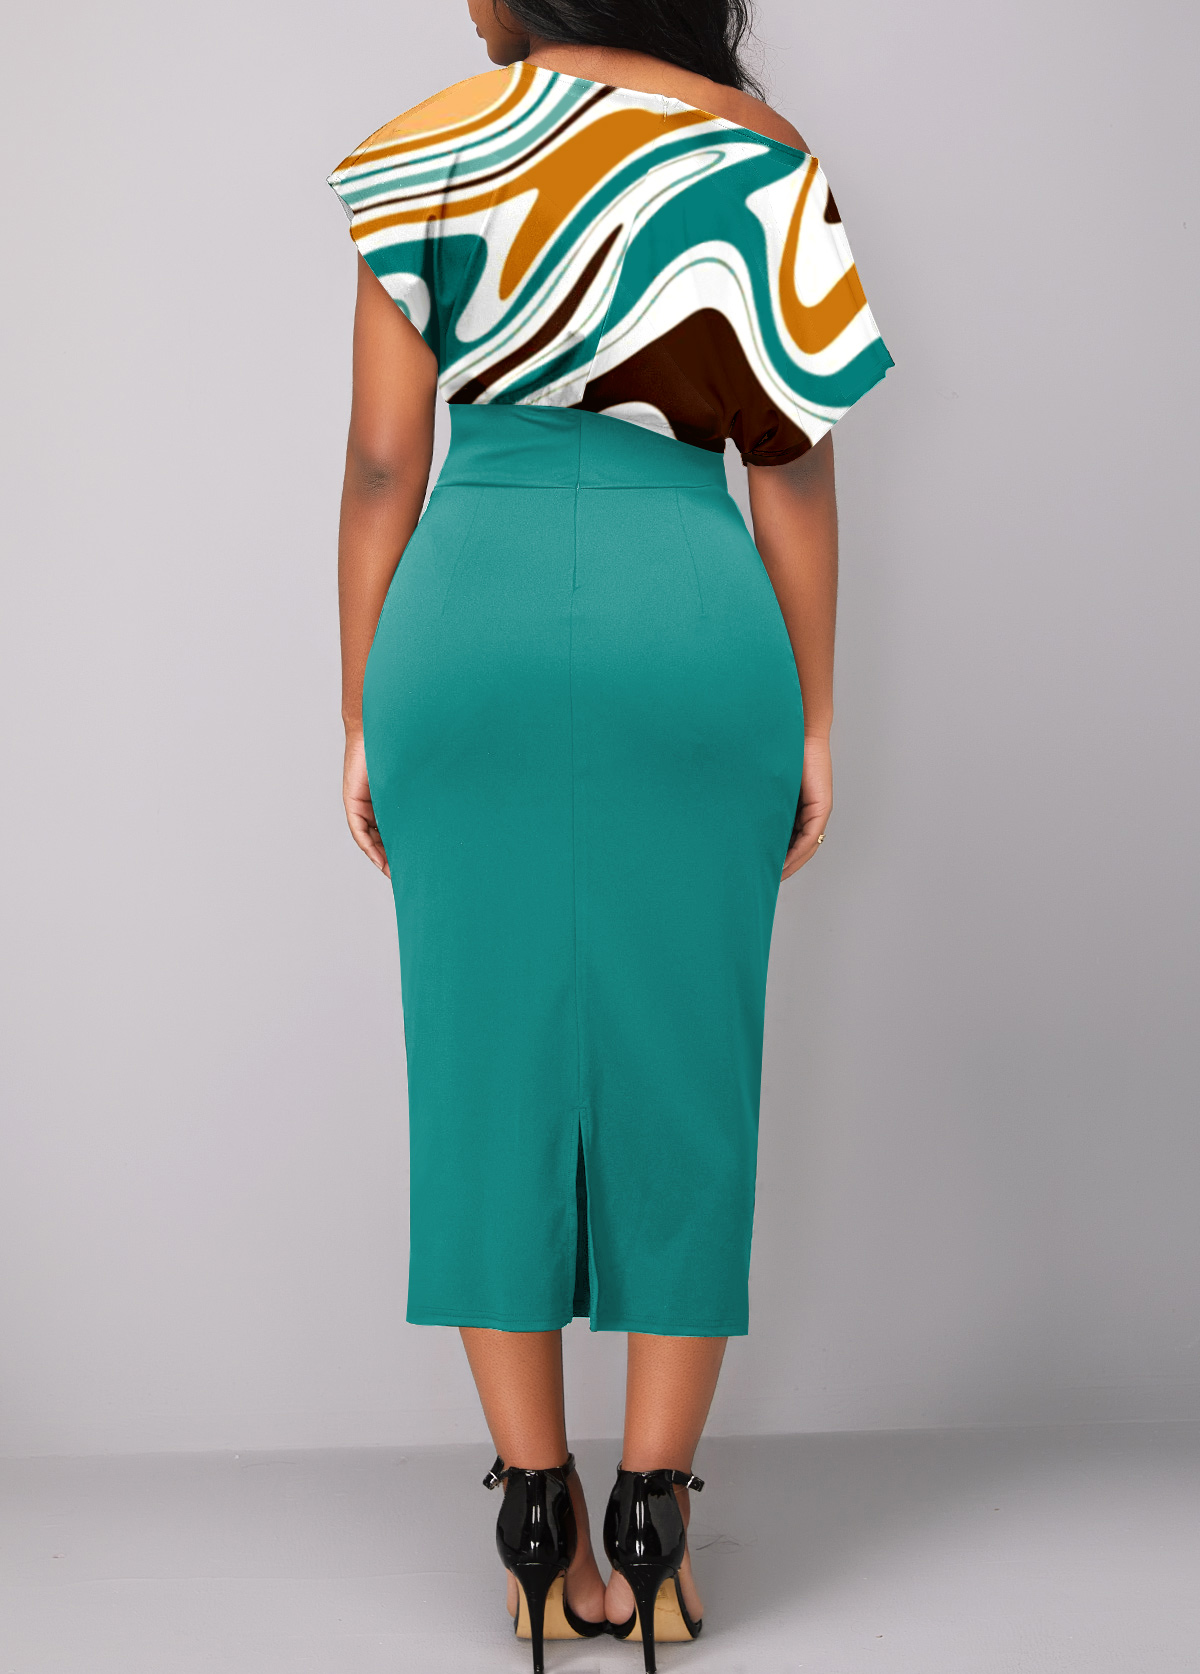 Geometric Print Button Turquoise Short Sleeve Bodycon Dress